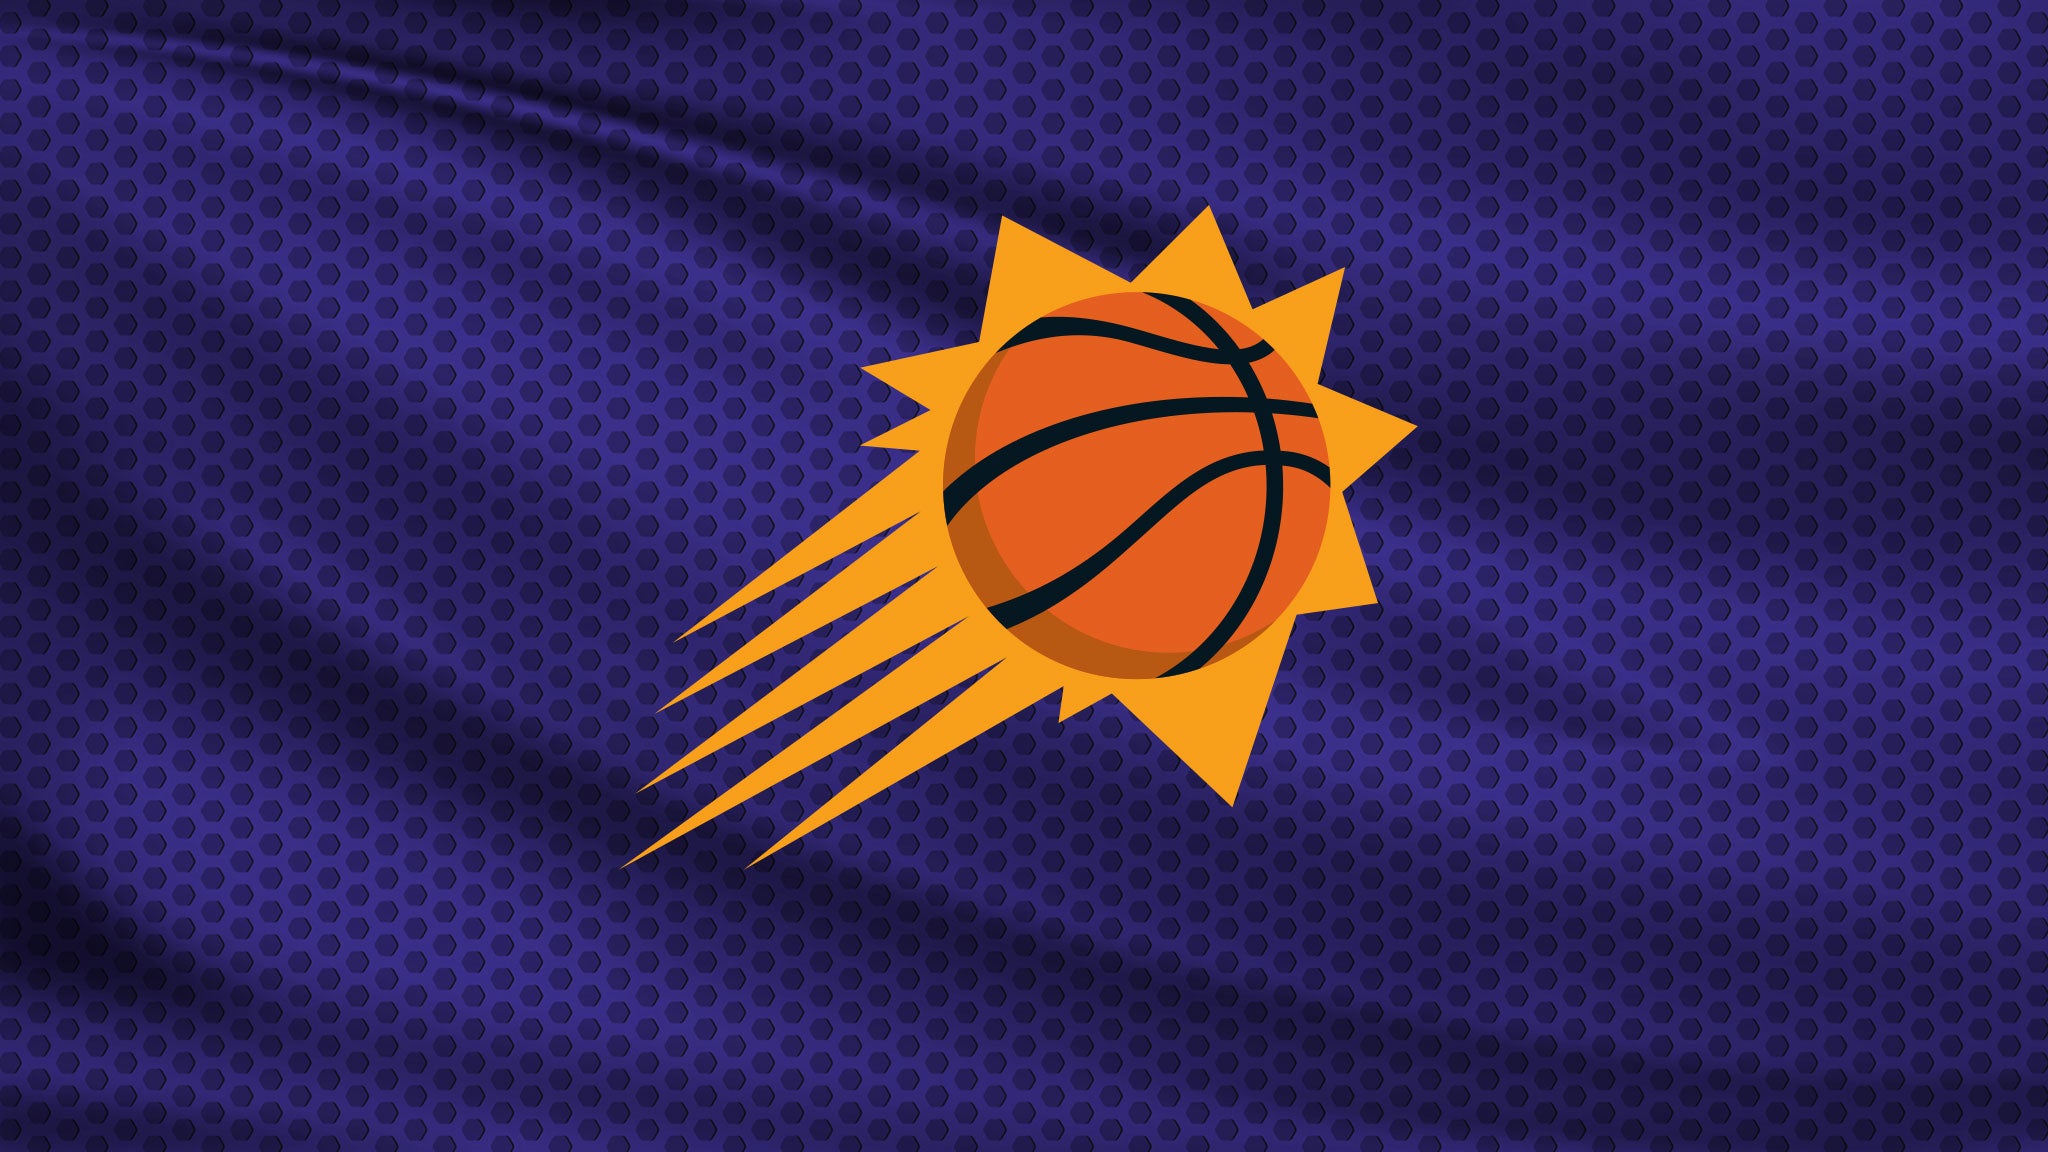 Phoenix Suns vs. LA Clippers in Phoenix promo photo for SMS presale offer code